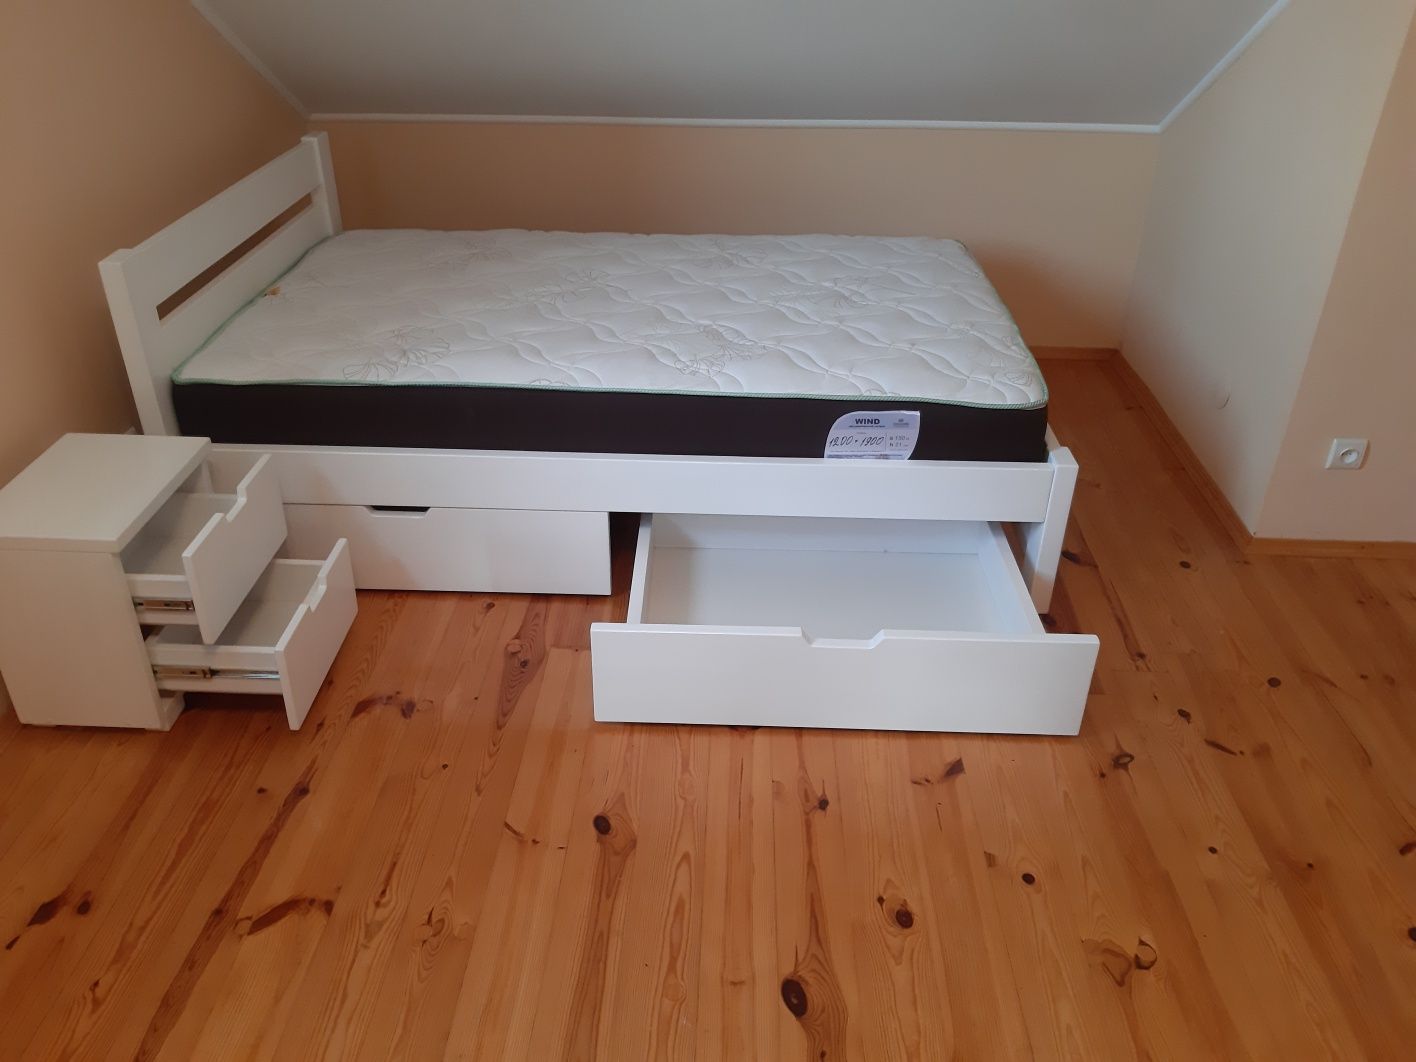 Односпальне ліжко, кровать с дерева 120/200, дерев'яне полуторне ліжко